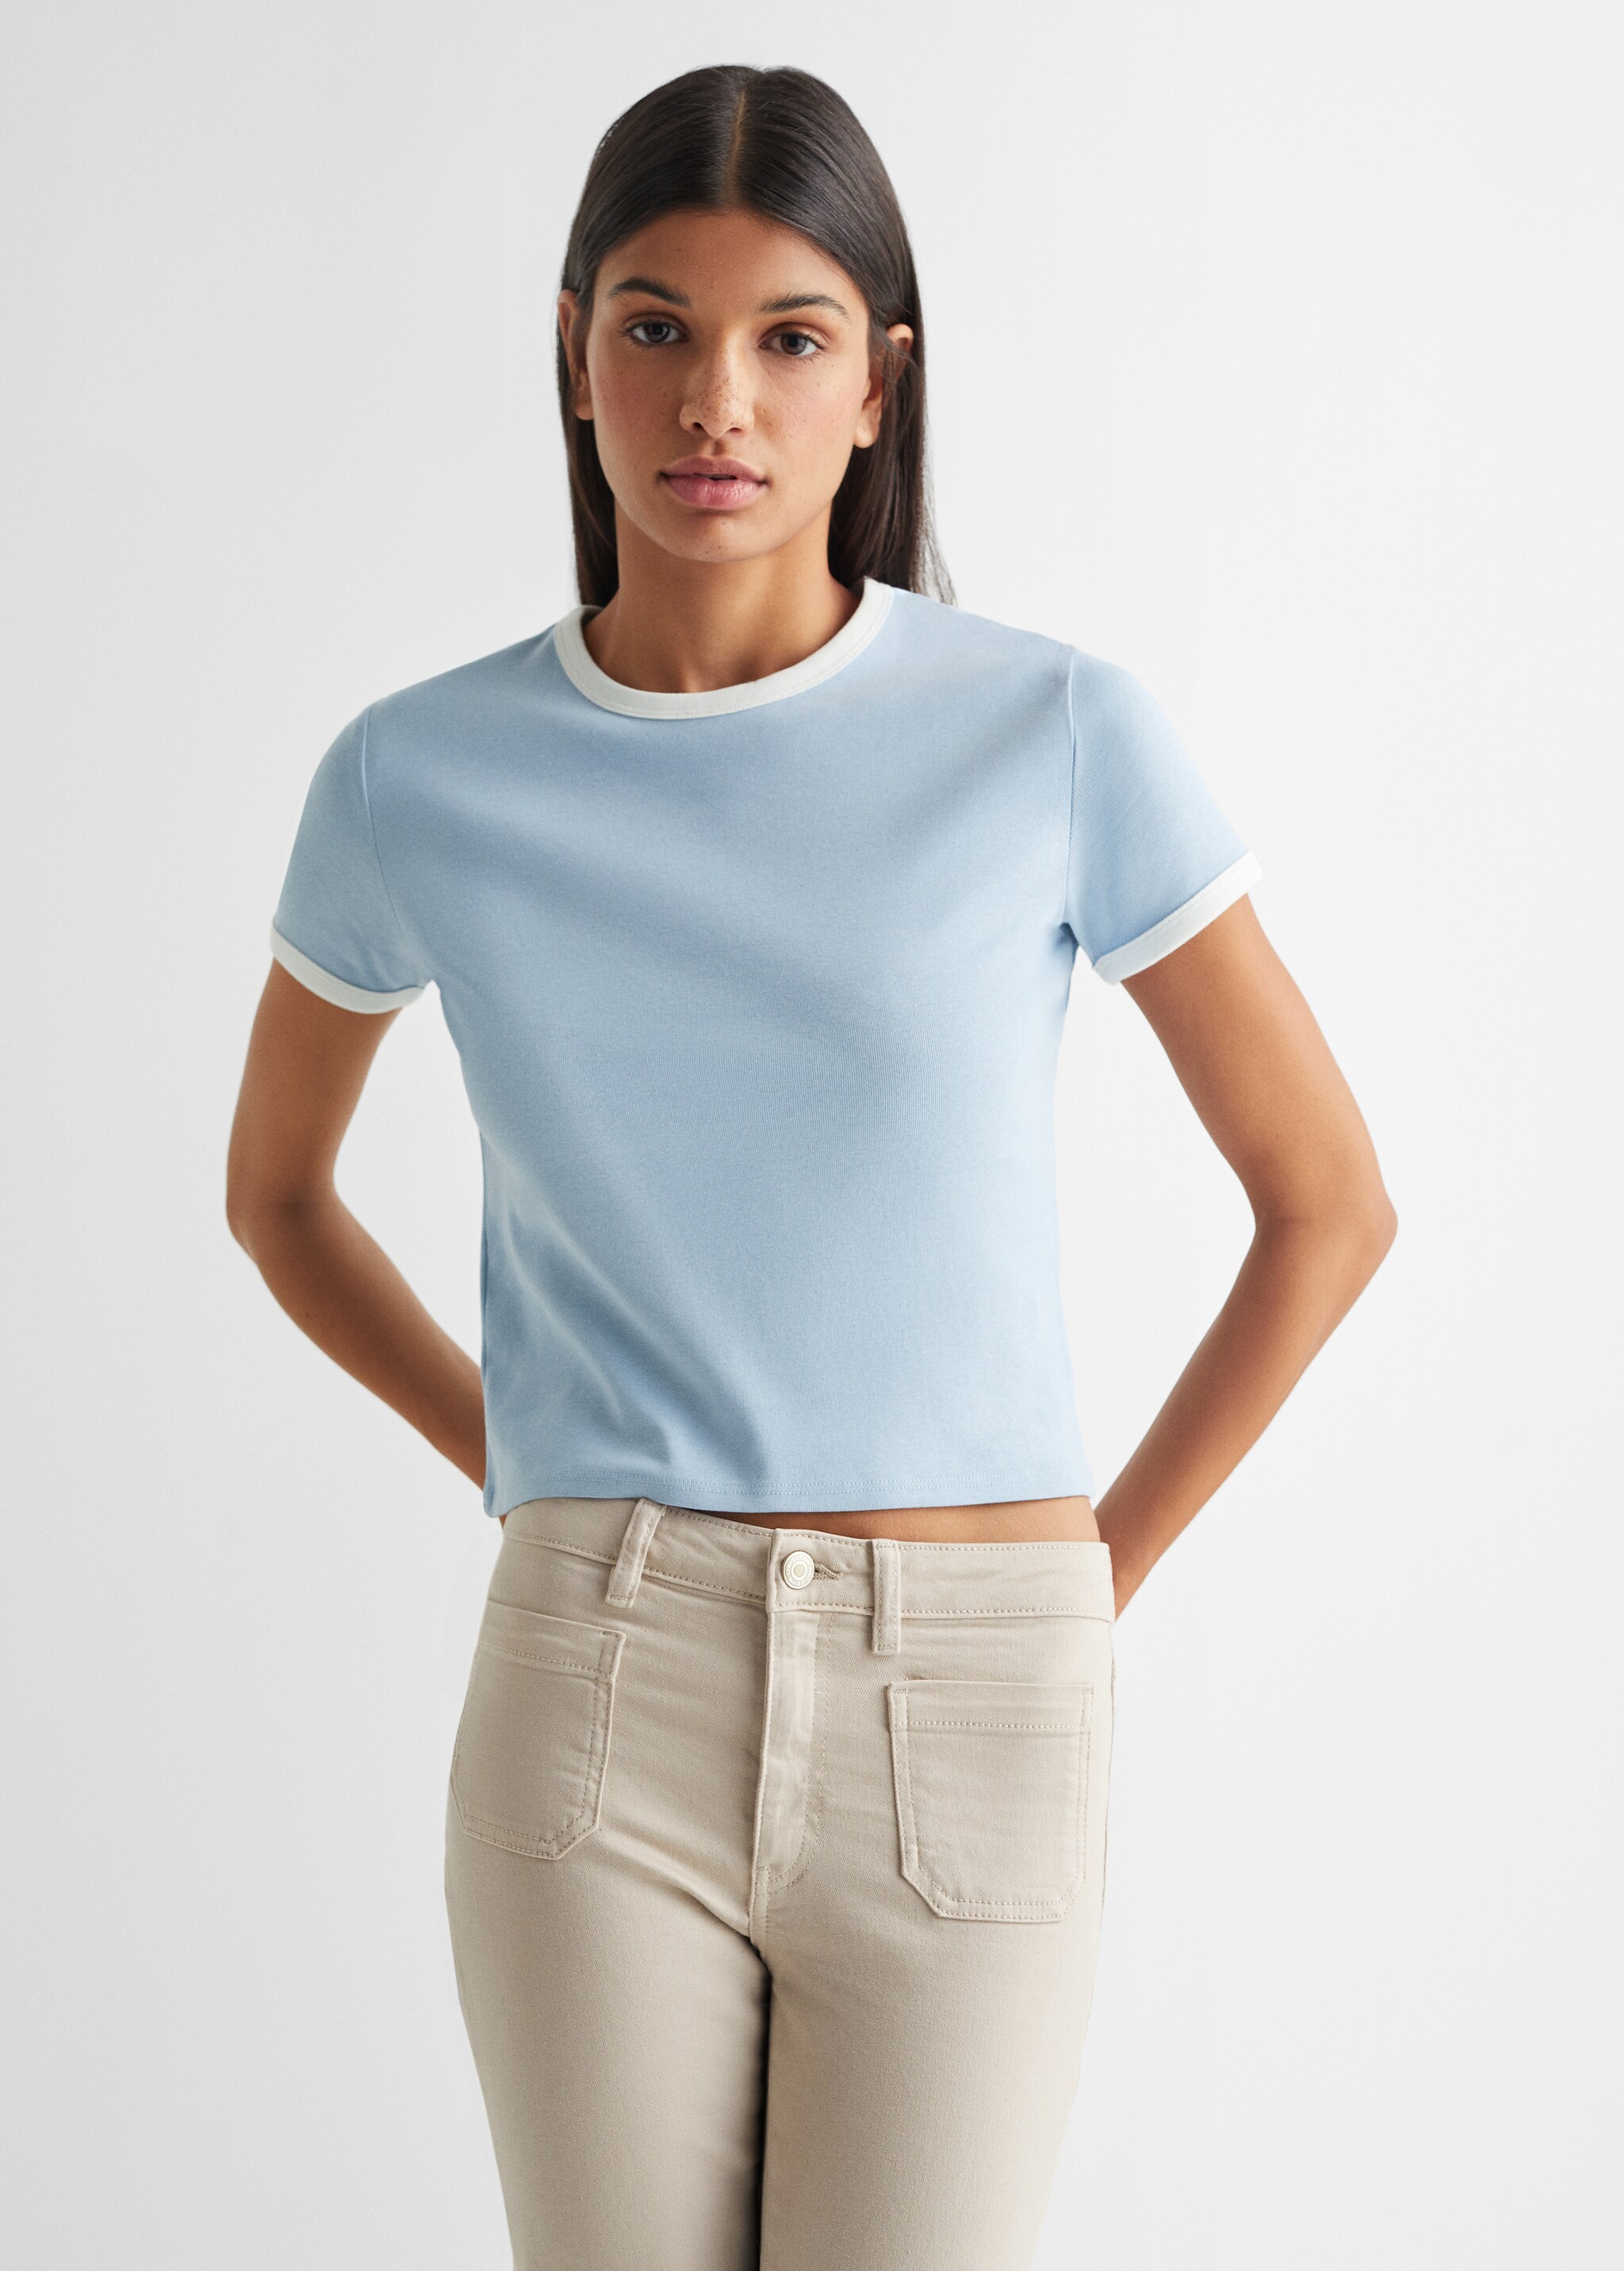 Crop short sleeve t-shirt - Medium plane